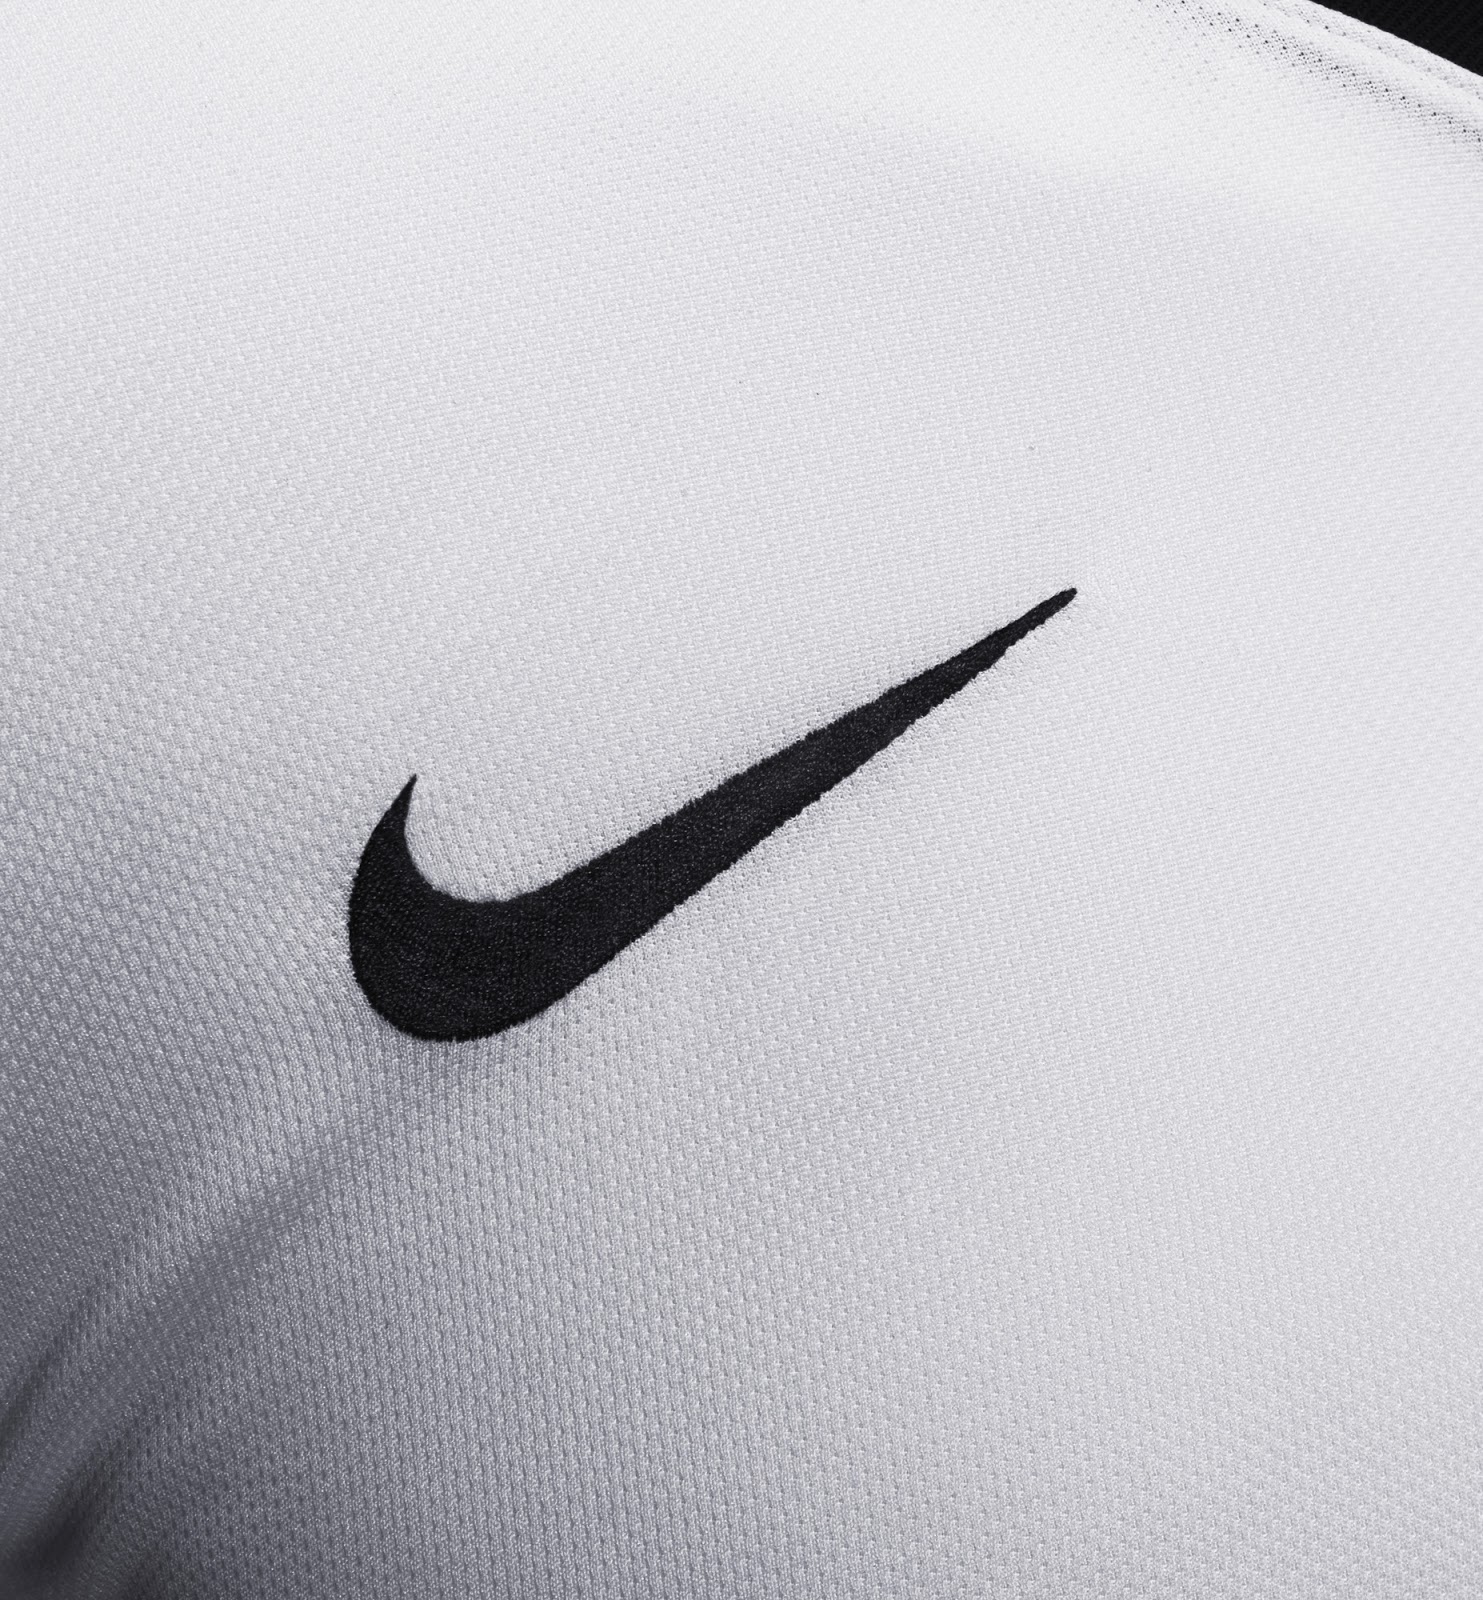 Nike 2013 USA Centenary Home Shirt Released - Footy Headlines